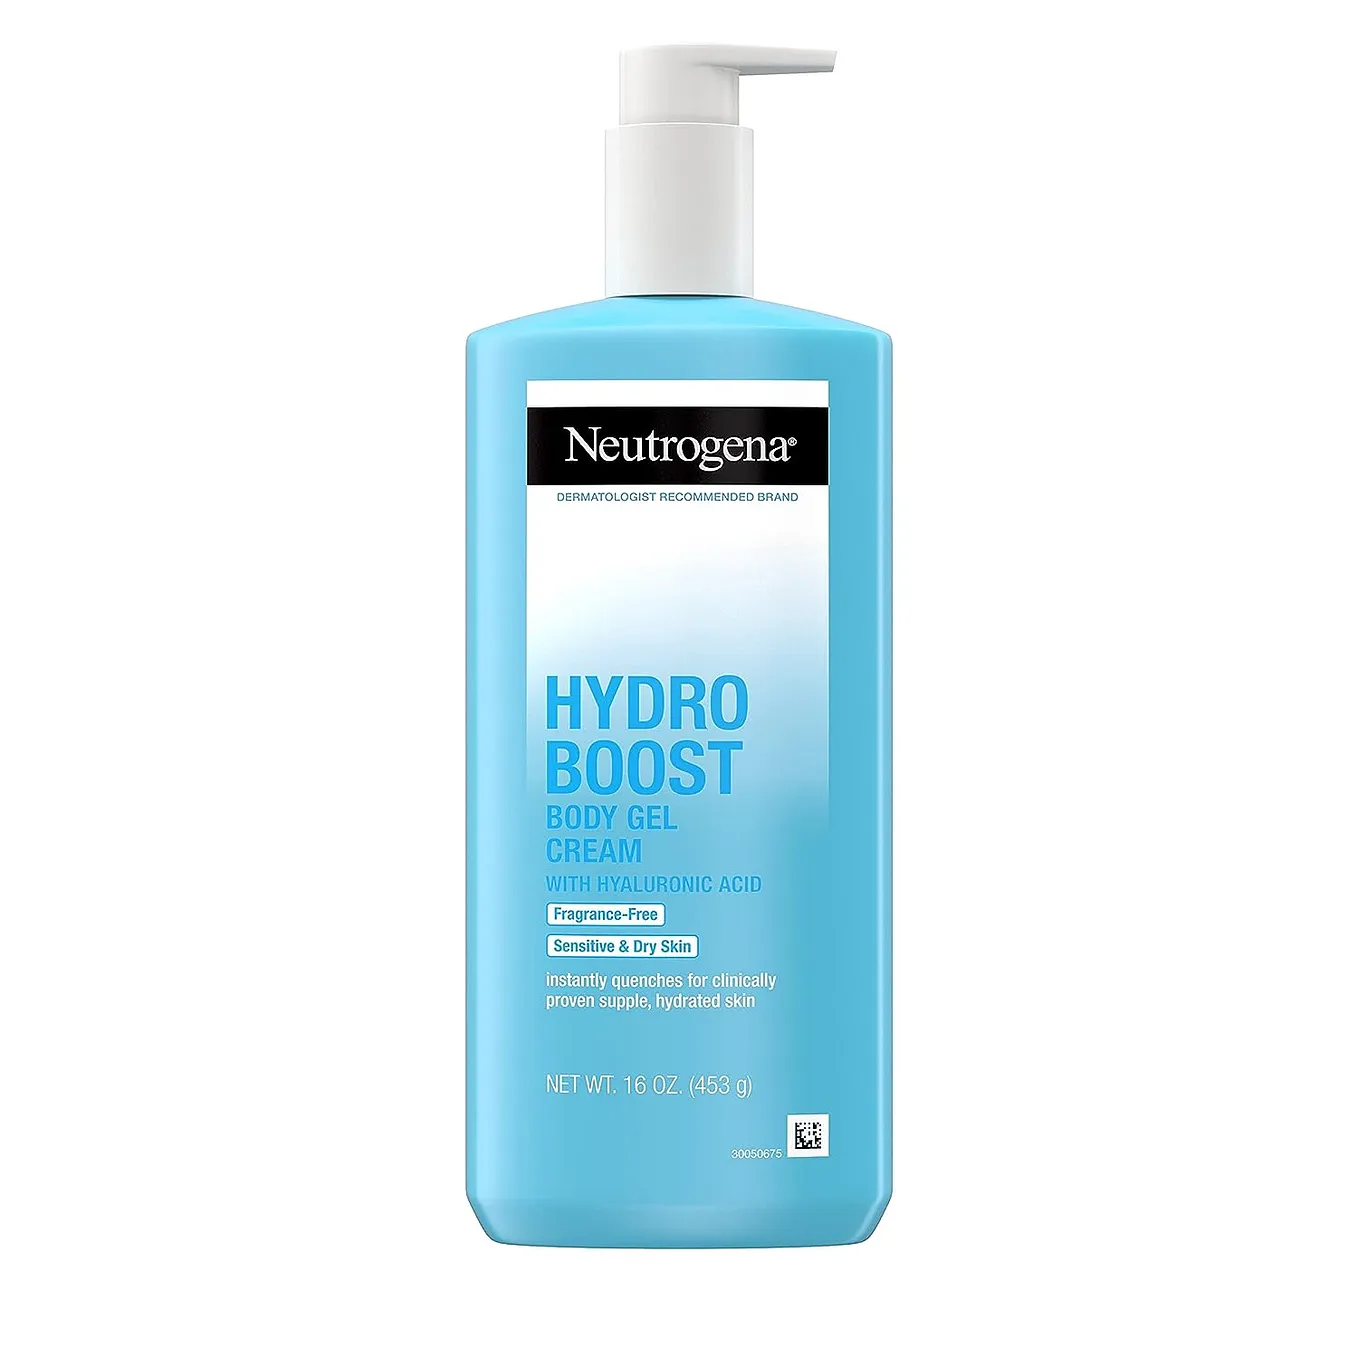 Neutrogena Hydro Boost Body Moisturizing Gel Cream Review